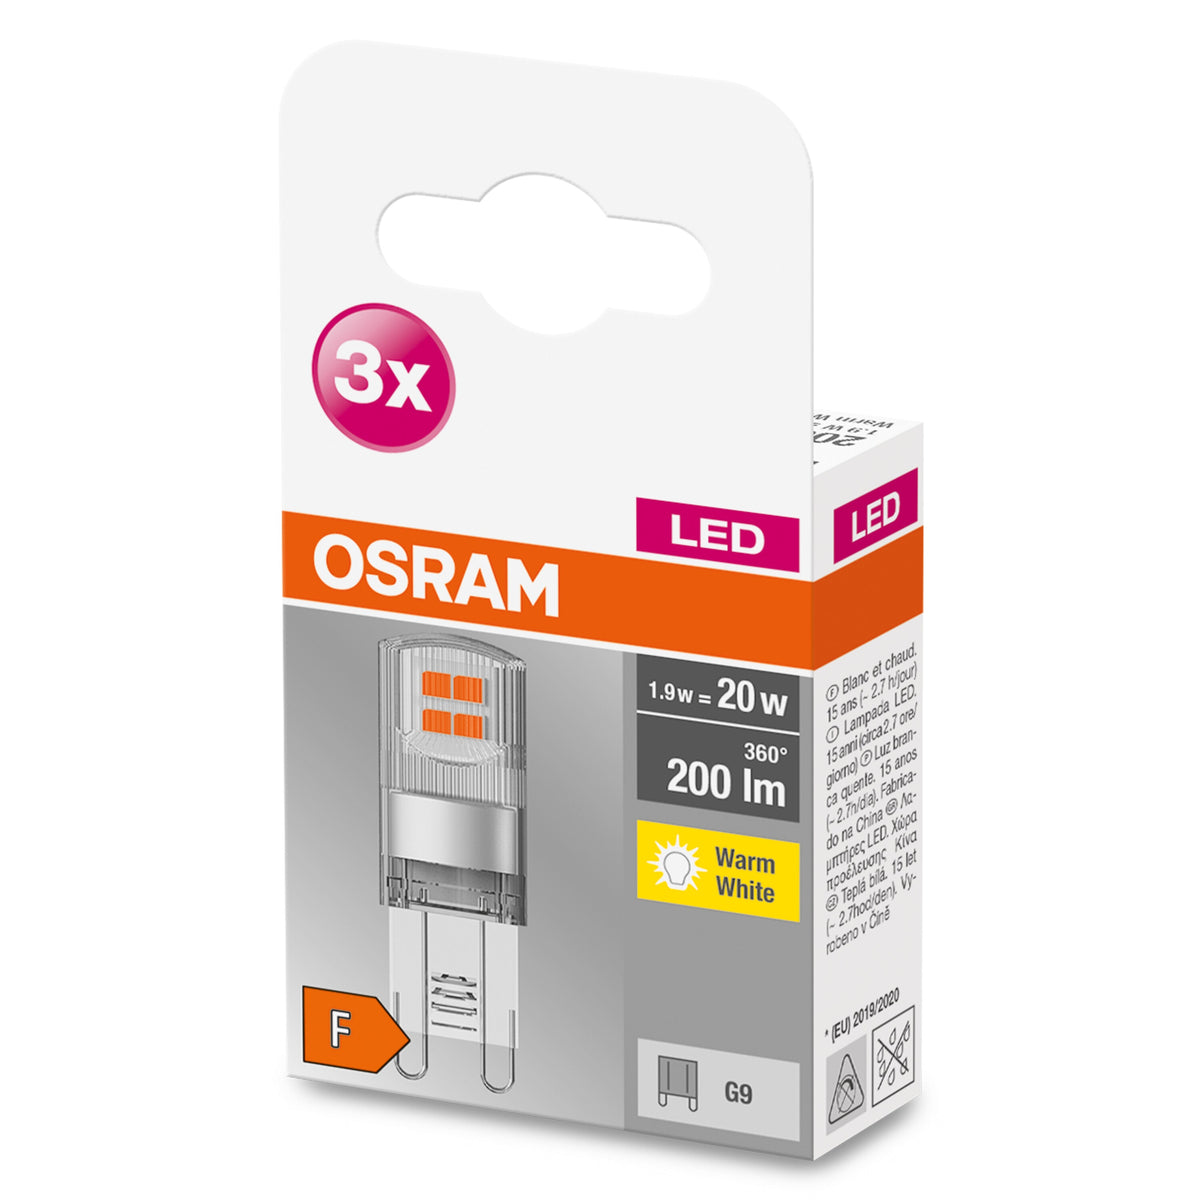 OSRAM LED Base Lampe à culot à broches LED (ex 20W) 1,9W / 2700K blanc chaud PIN G9 pack de 3